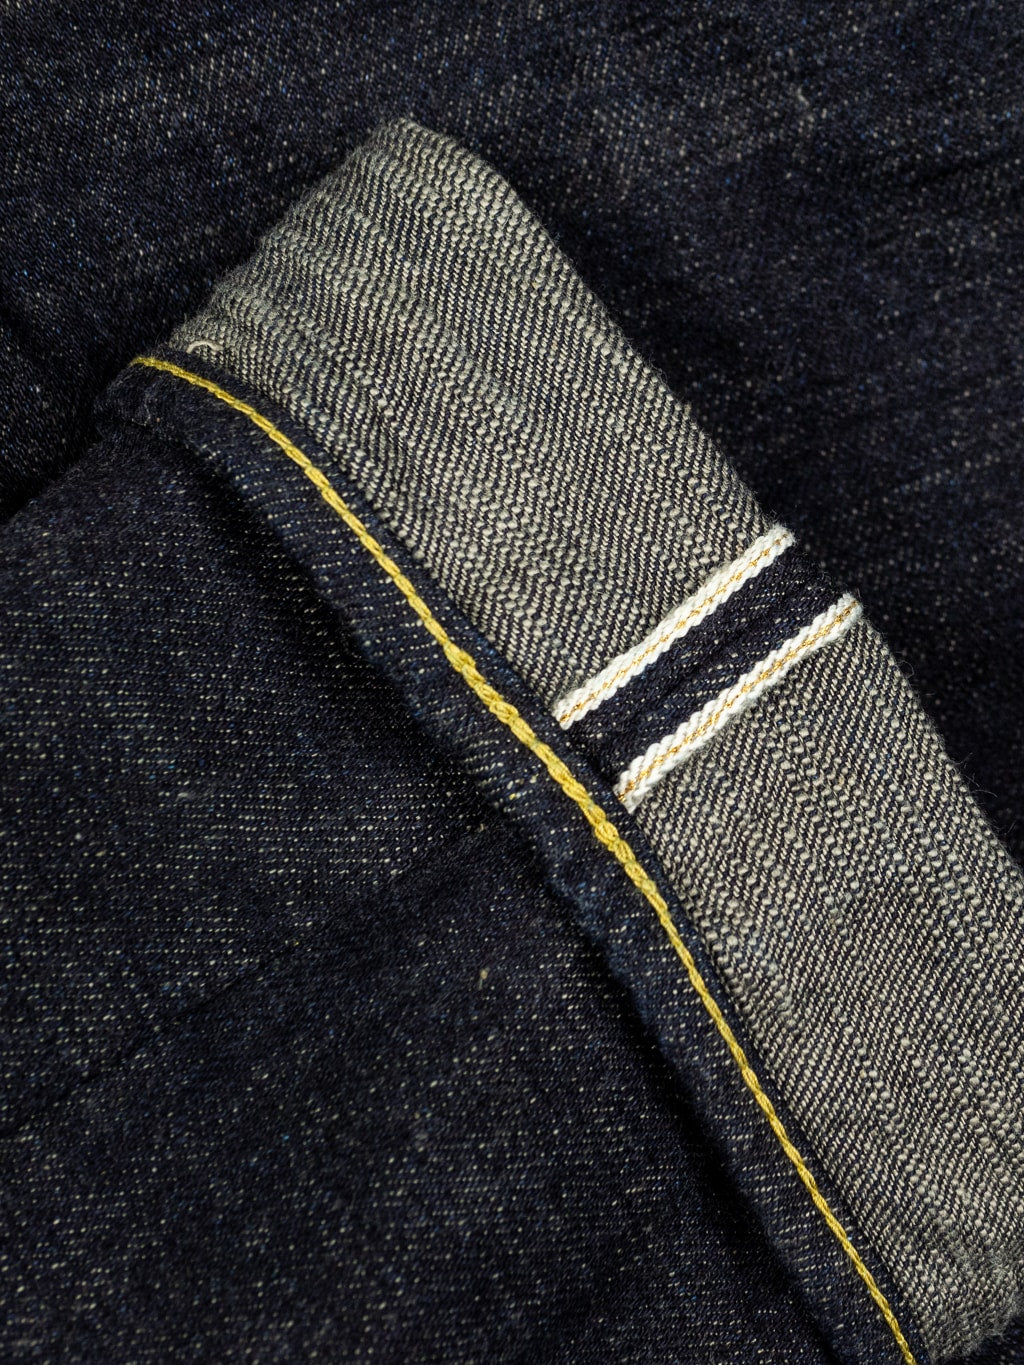 The Strike Gold Slub Weft Slim Jeans chain stitching